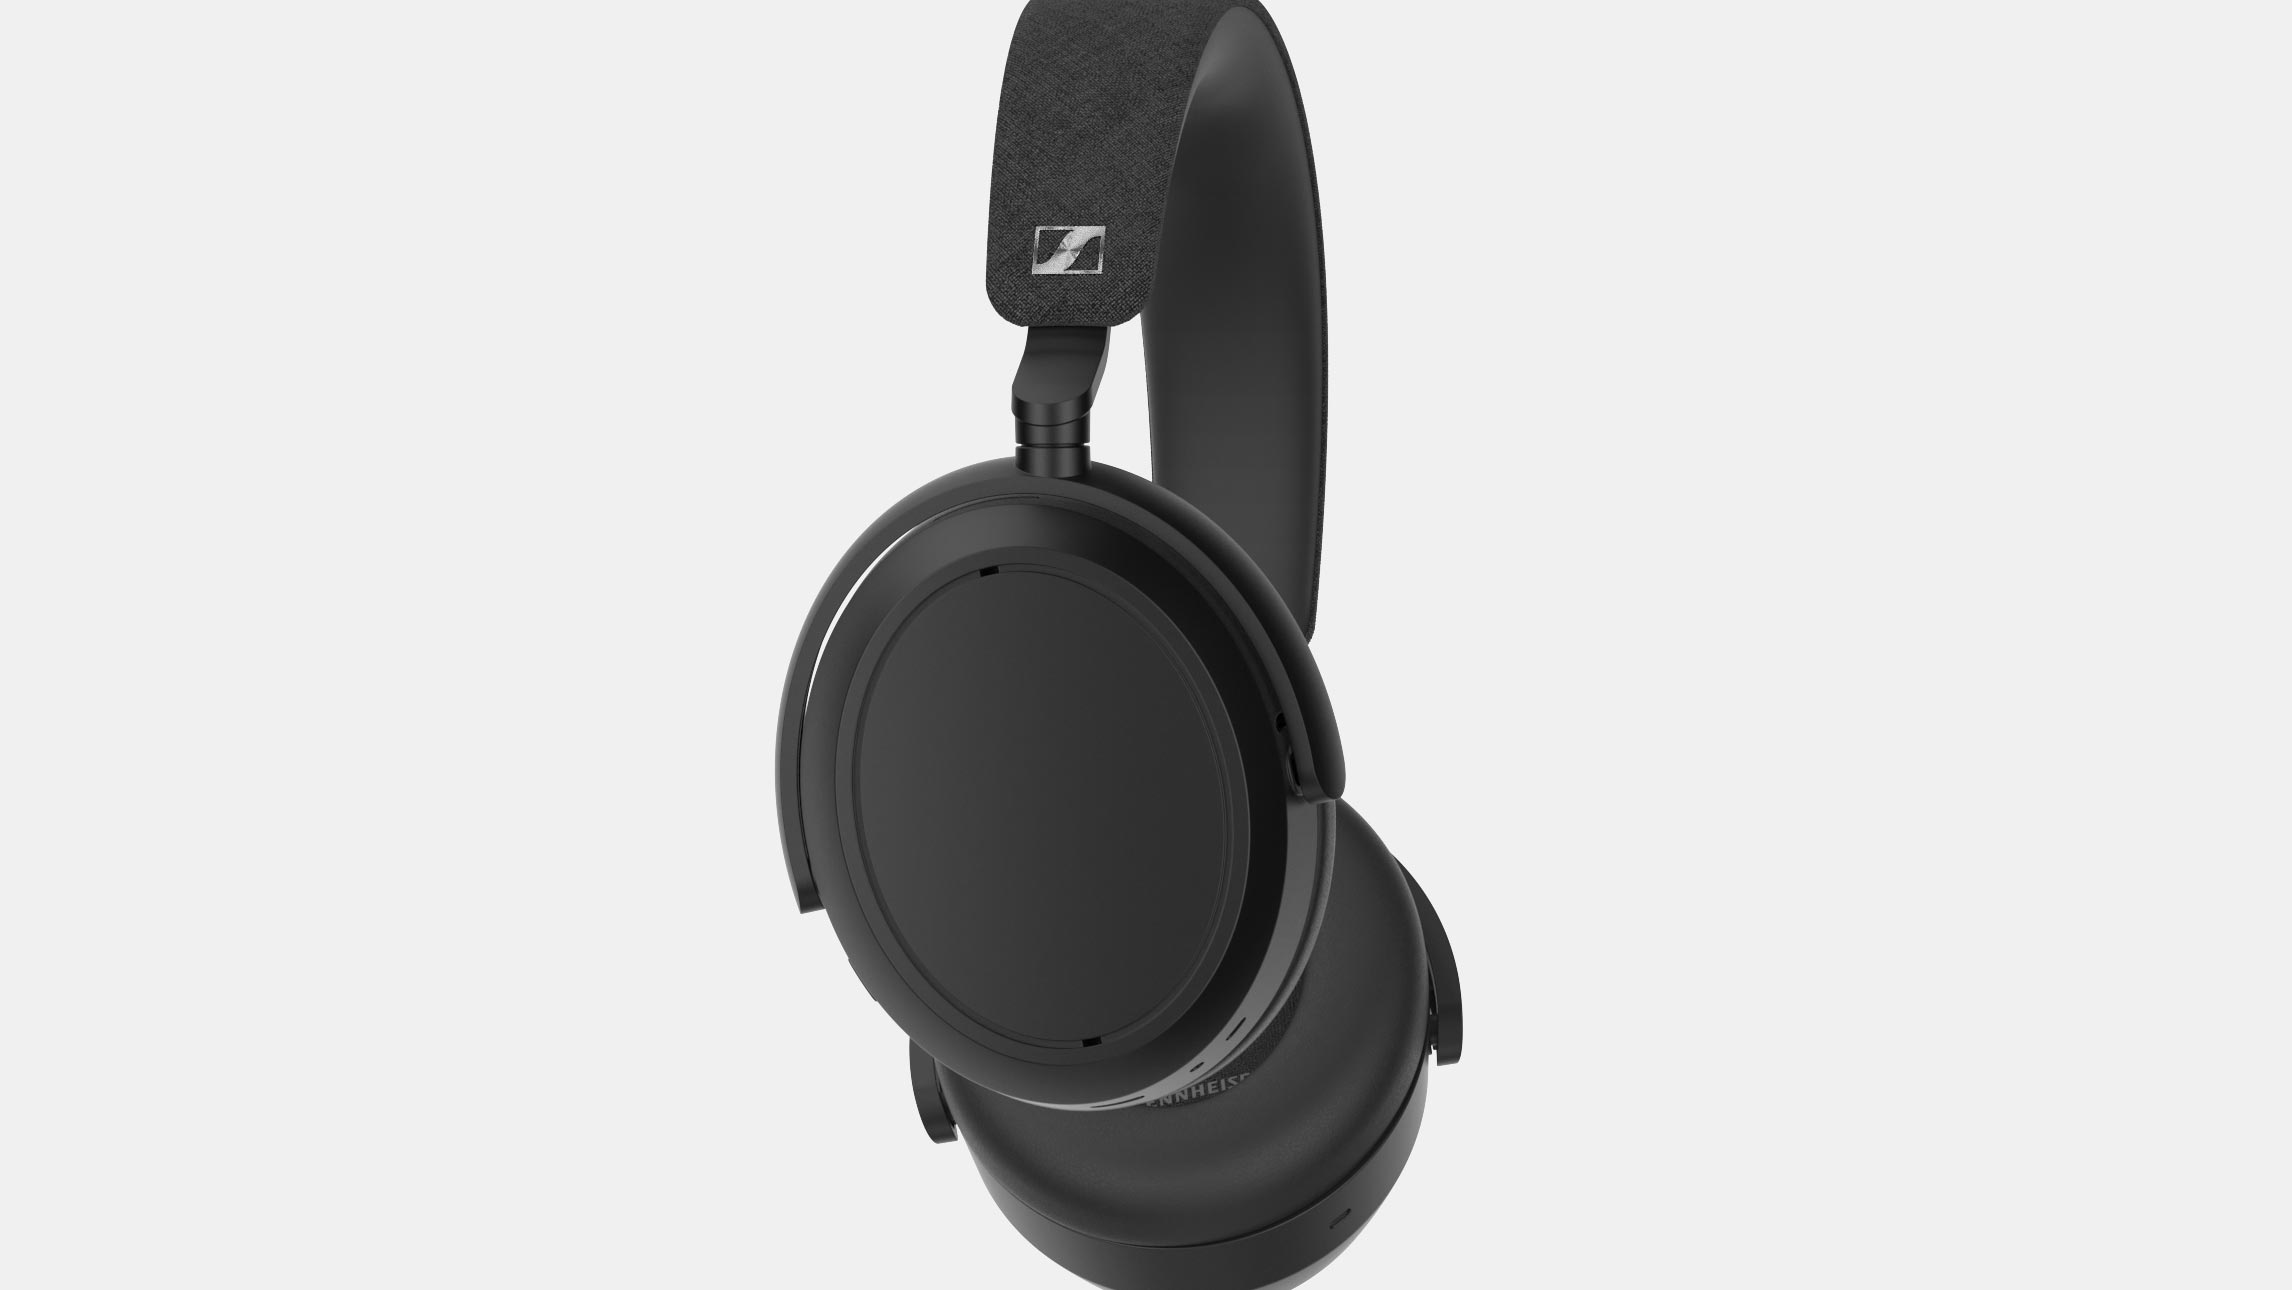 30% off pre-order of sennheiser momentum 4 wireless bluetooth headphones  $244.96